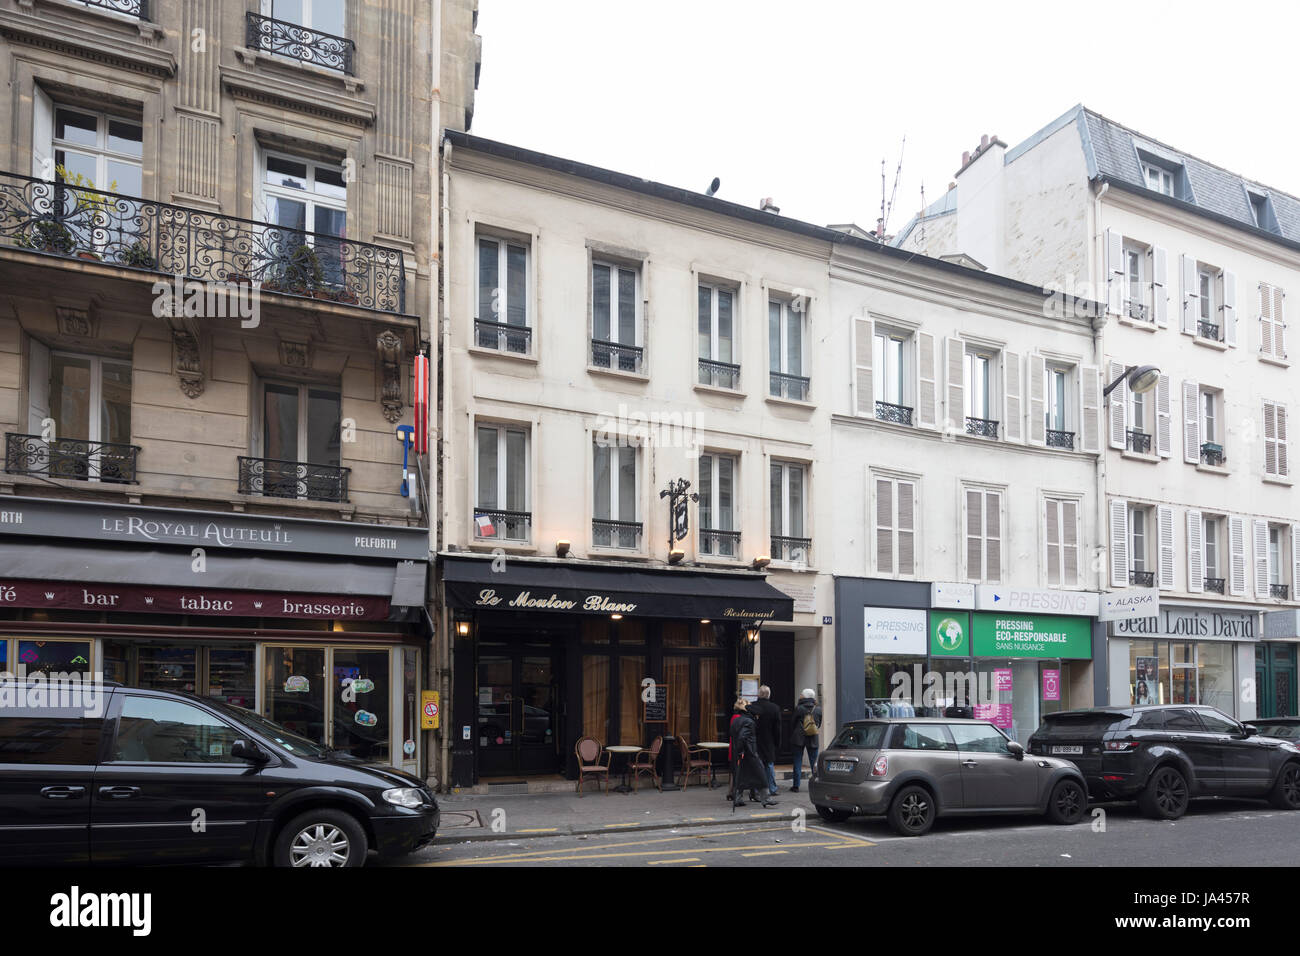 Paris auteuil hi-res stock photography and images - Alamy